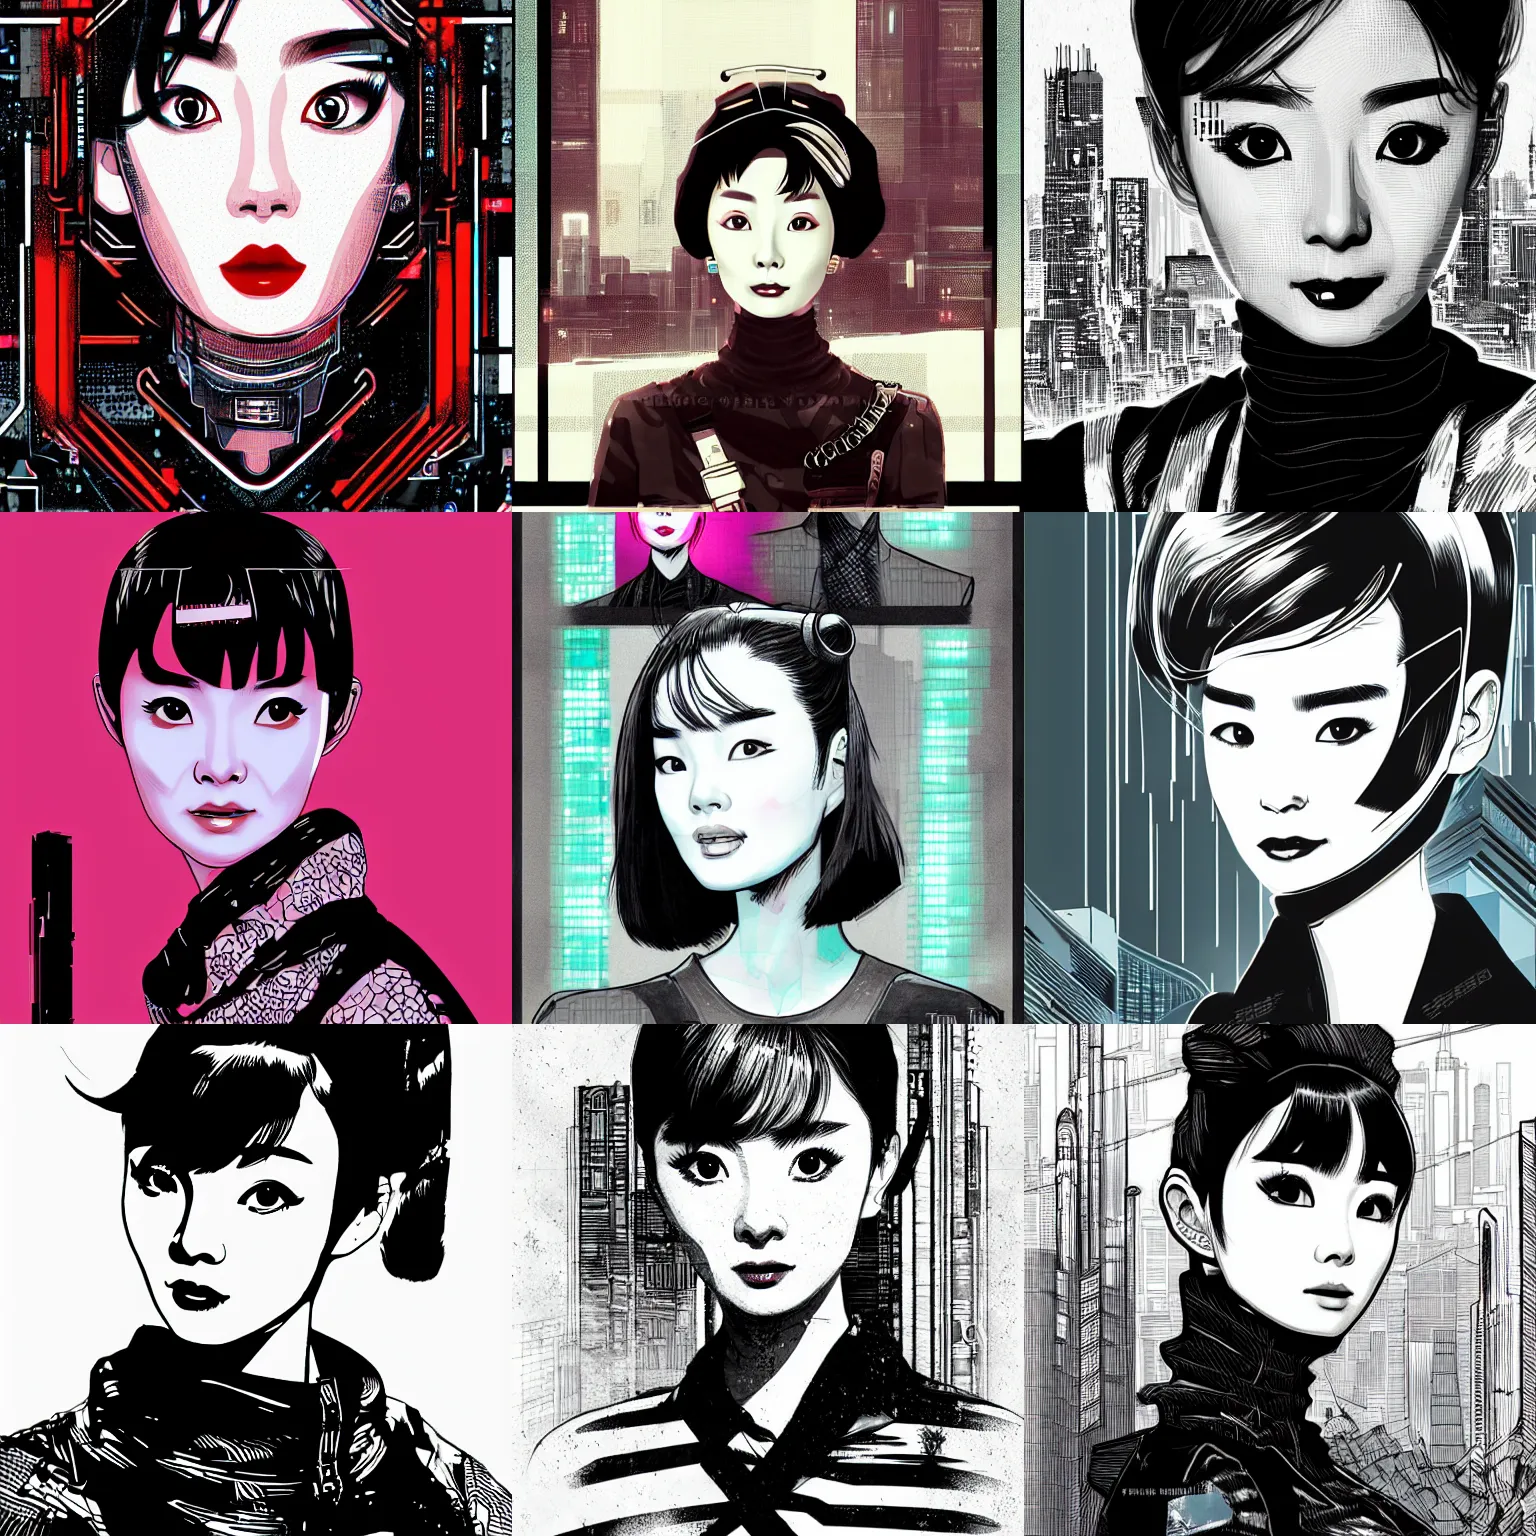 Prompt: korean audrey hepburn, detailed cyberpunk portrait by tim doyle